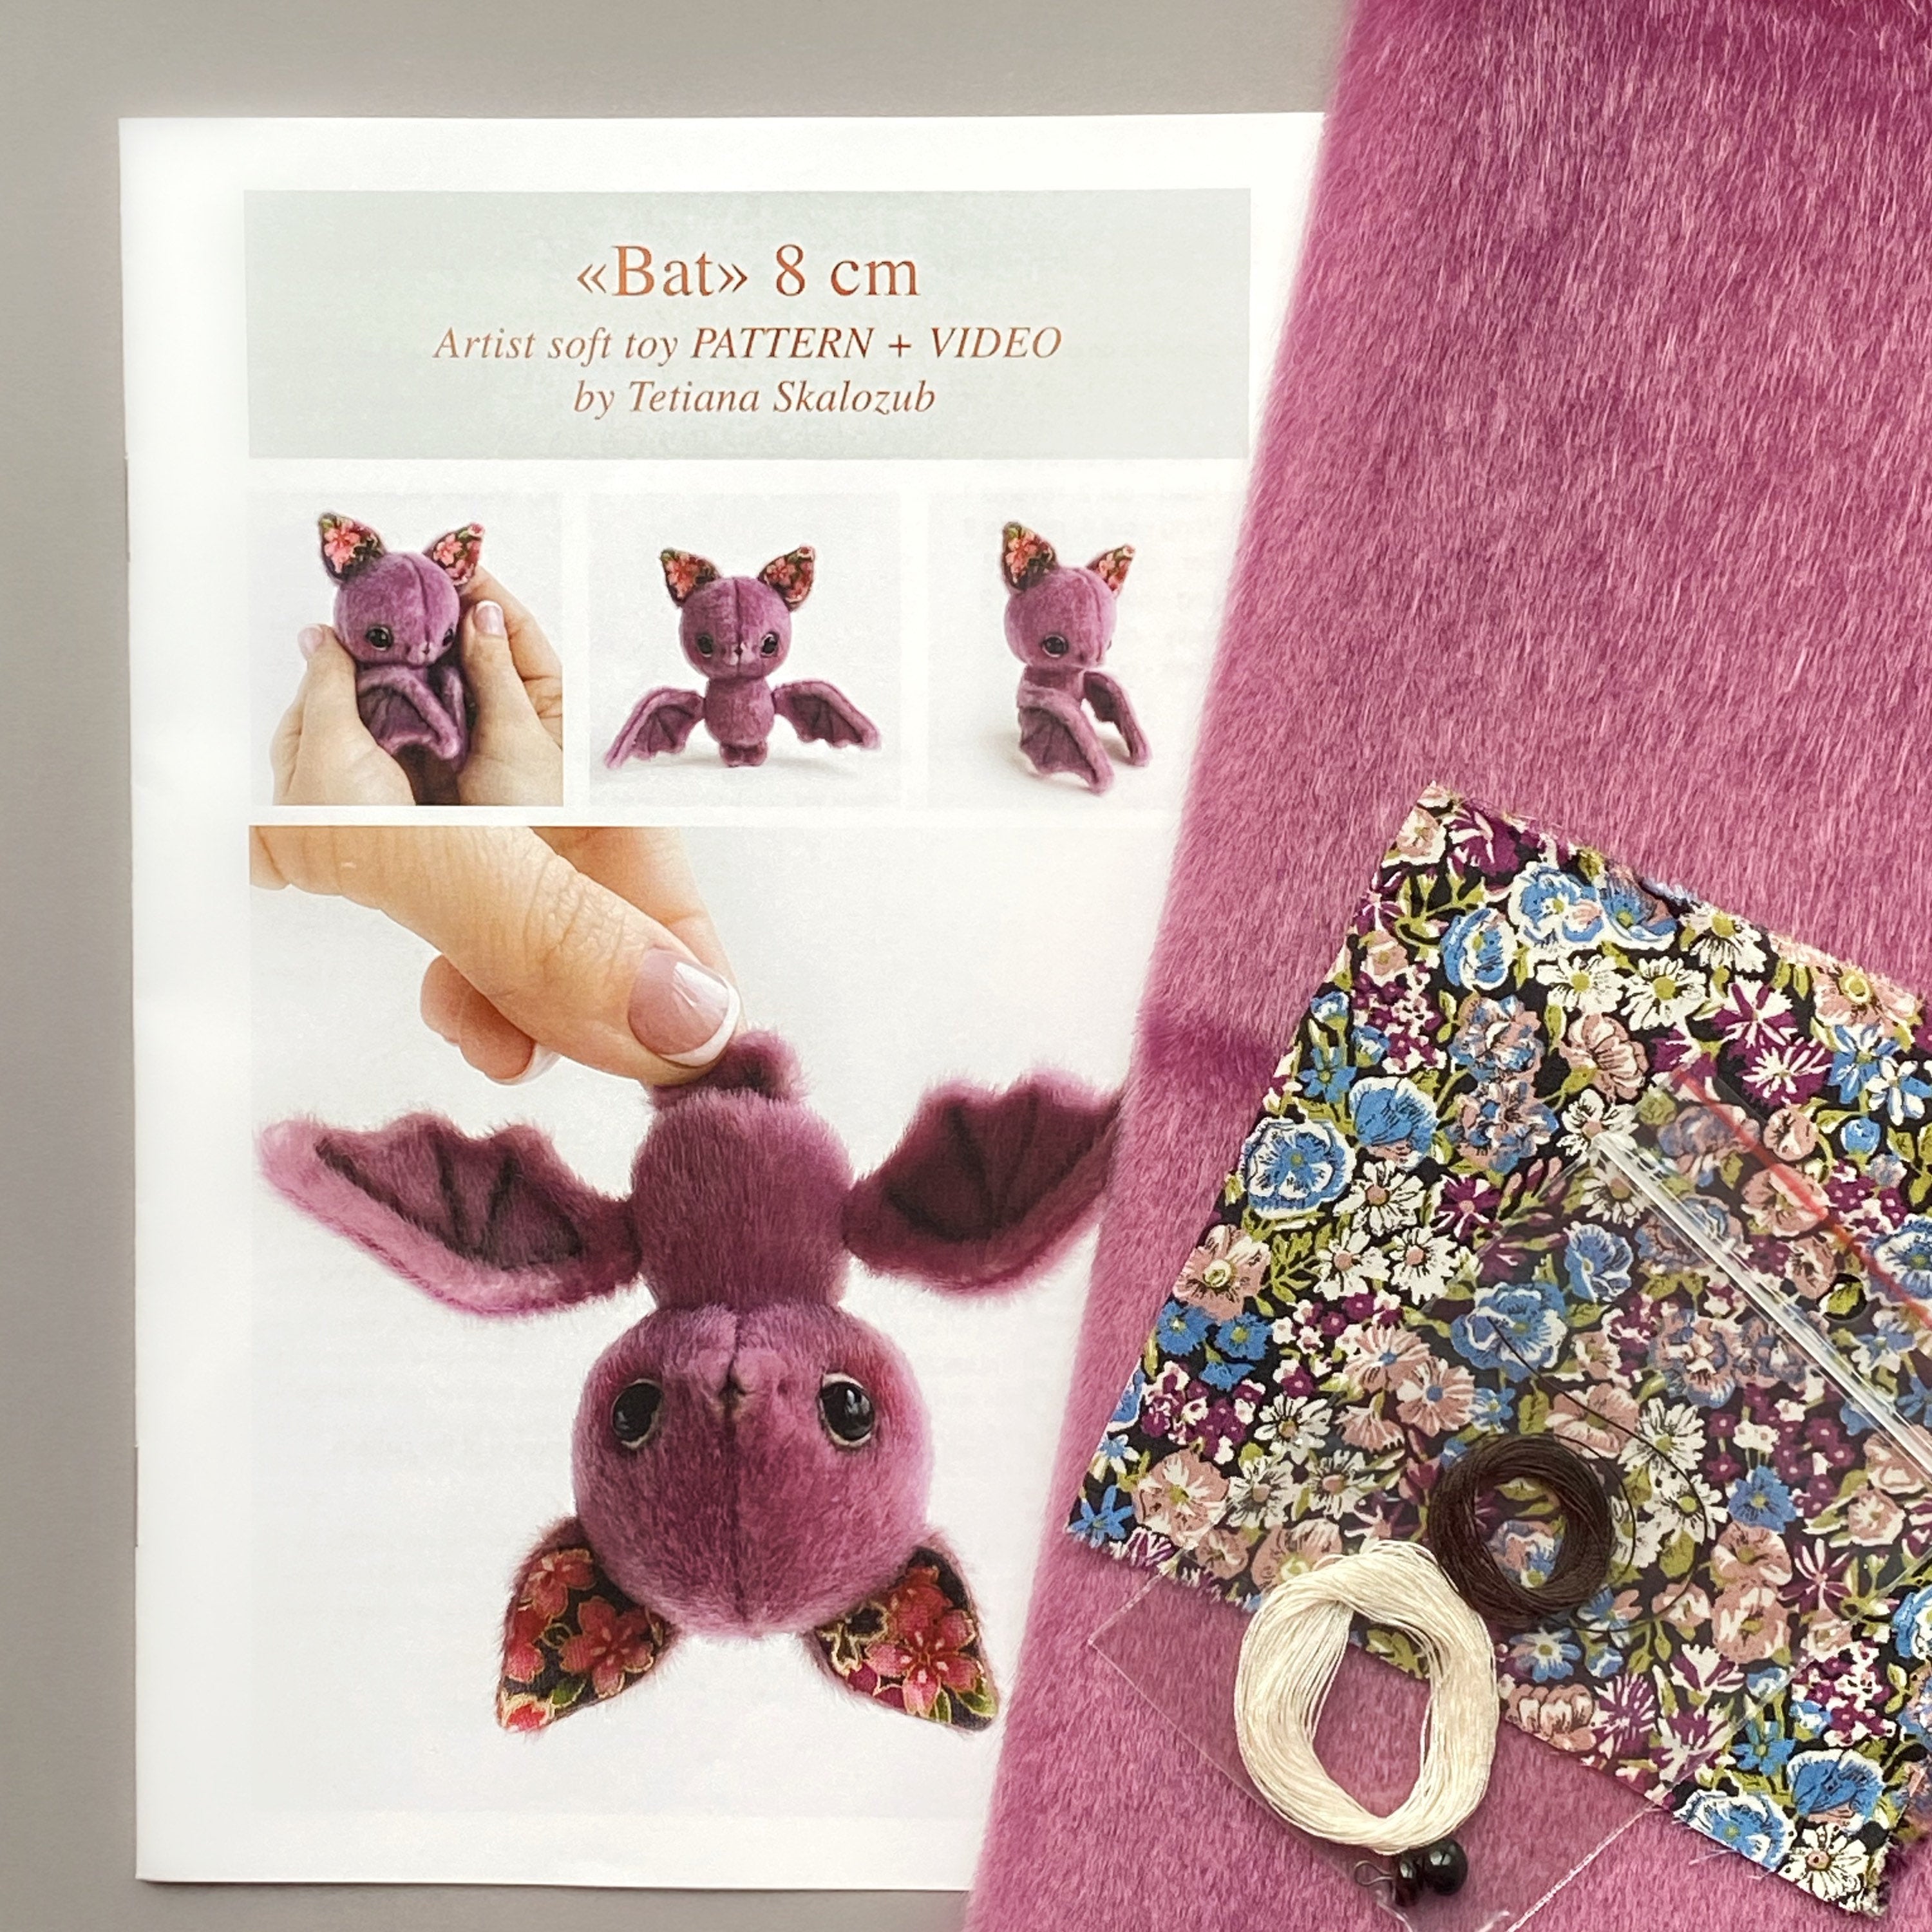 Bat - Sewing KIT, artist pattern, stuffed toy bat, cute bat tutorials, soft toy diy stuffed animal pattern craft kit for adults Bestseller